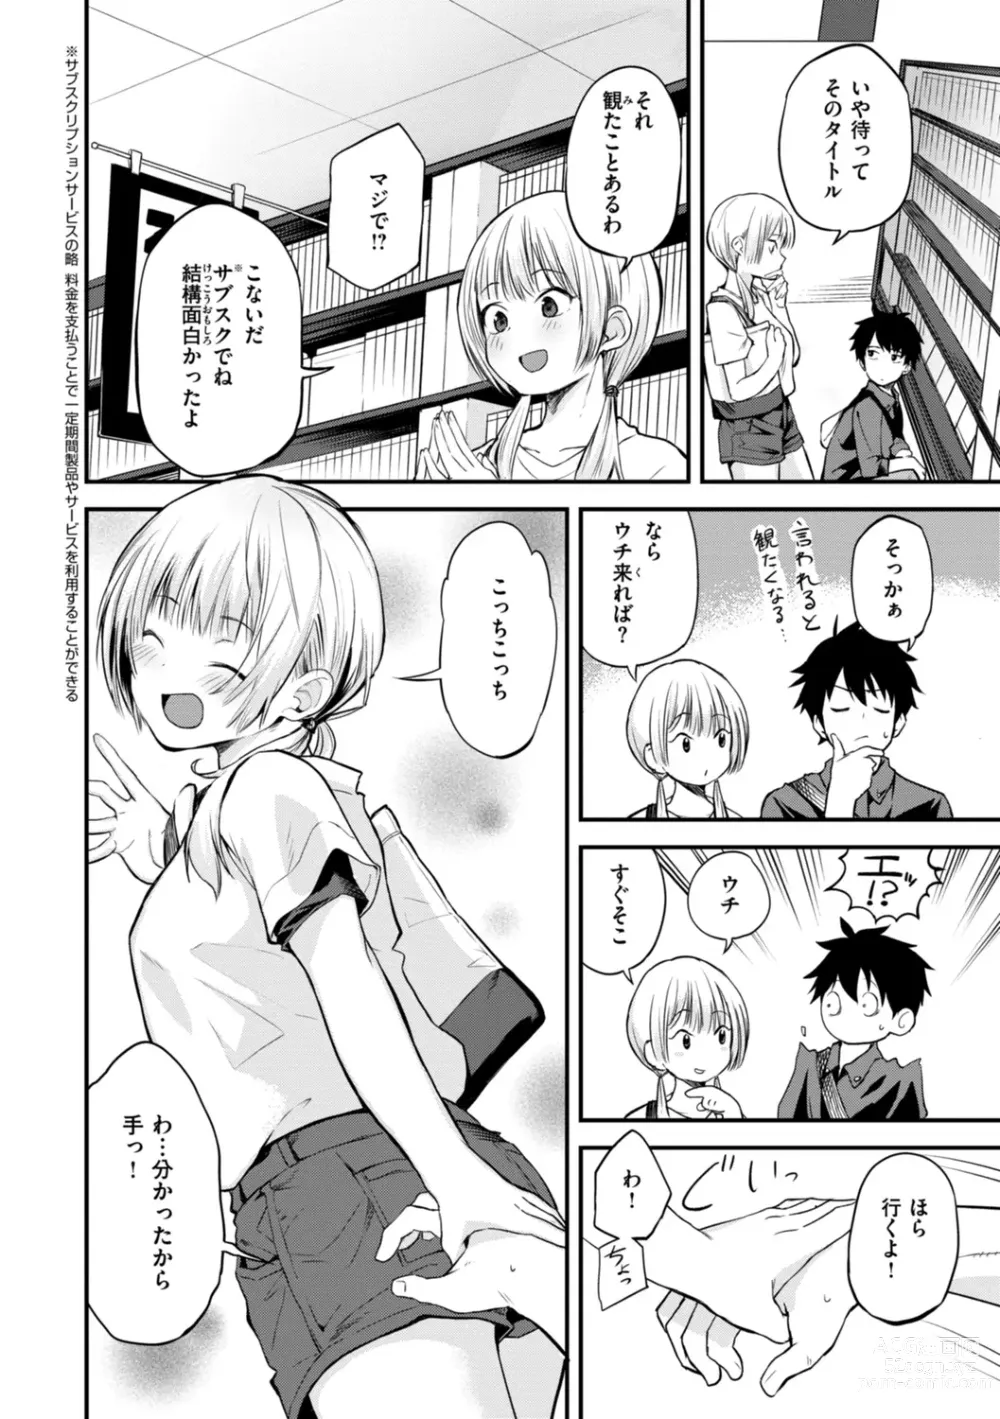 Page 4 of manga Jaa, Ecchi Shichau? - Shall we have H then?